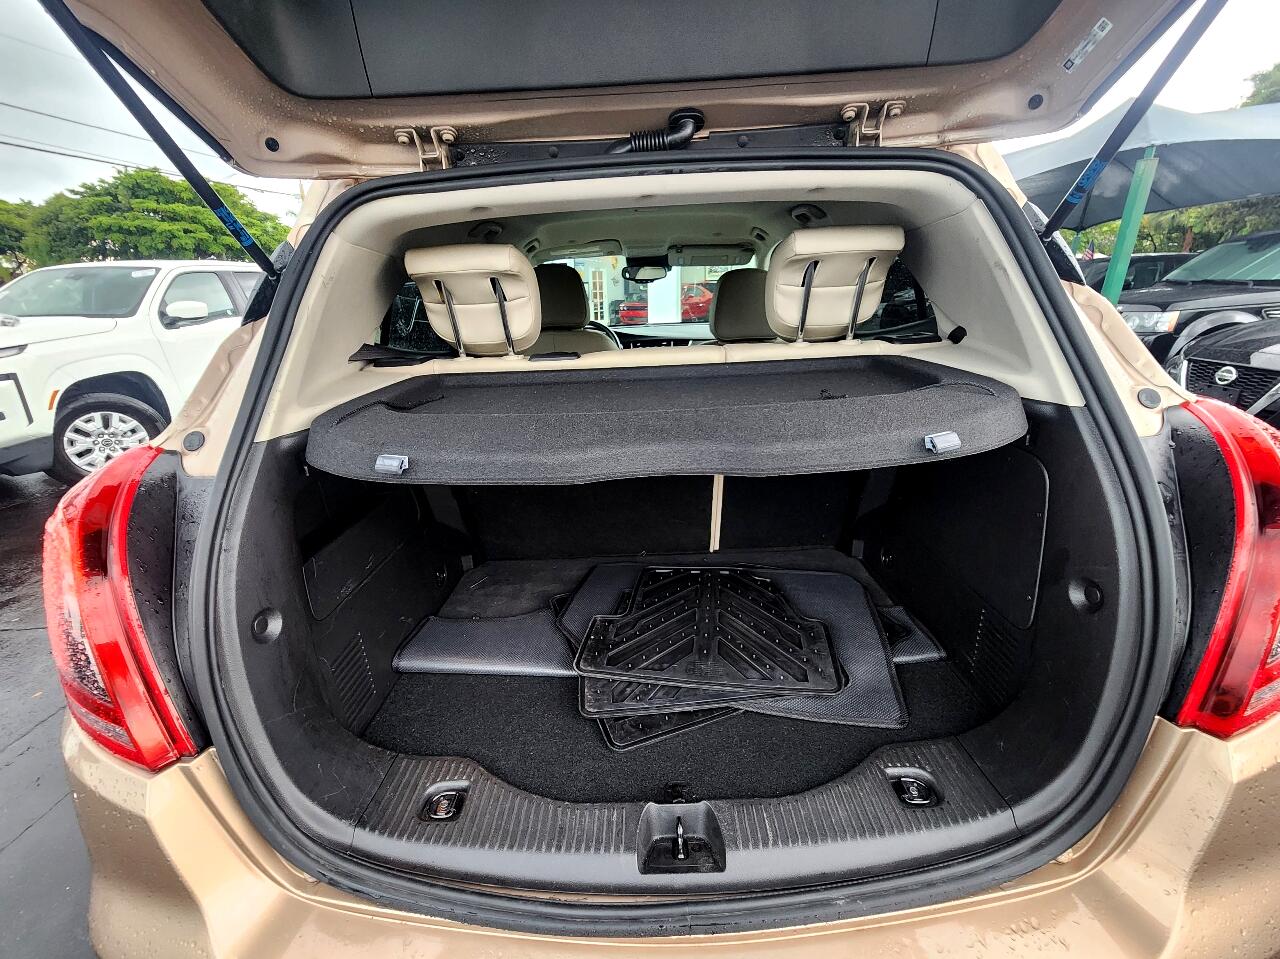 2019 Buick Encore SUV / Crossover - $19,999